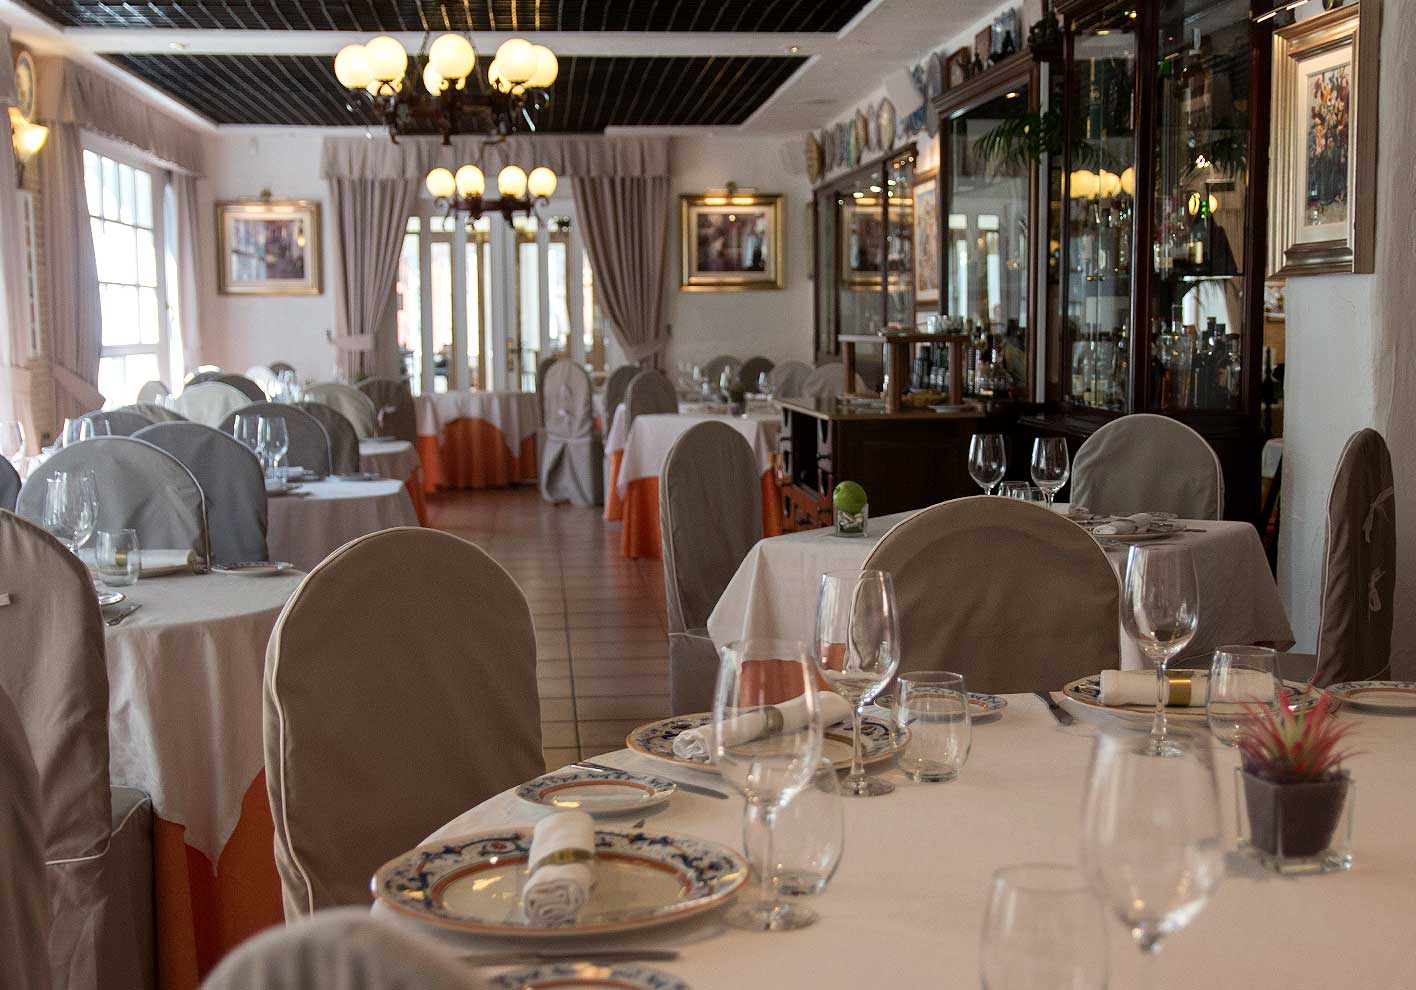 Main Dining Room 04 - Hotel Restaurante Terraza Carmona in Vera, Almeria